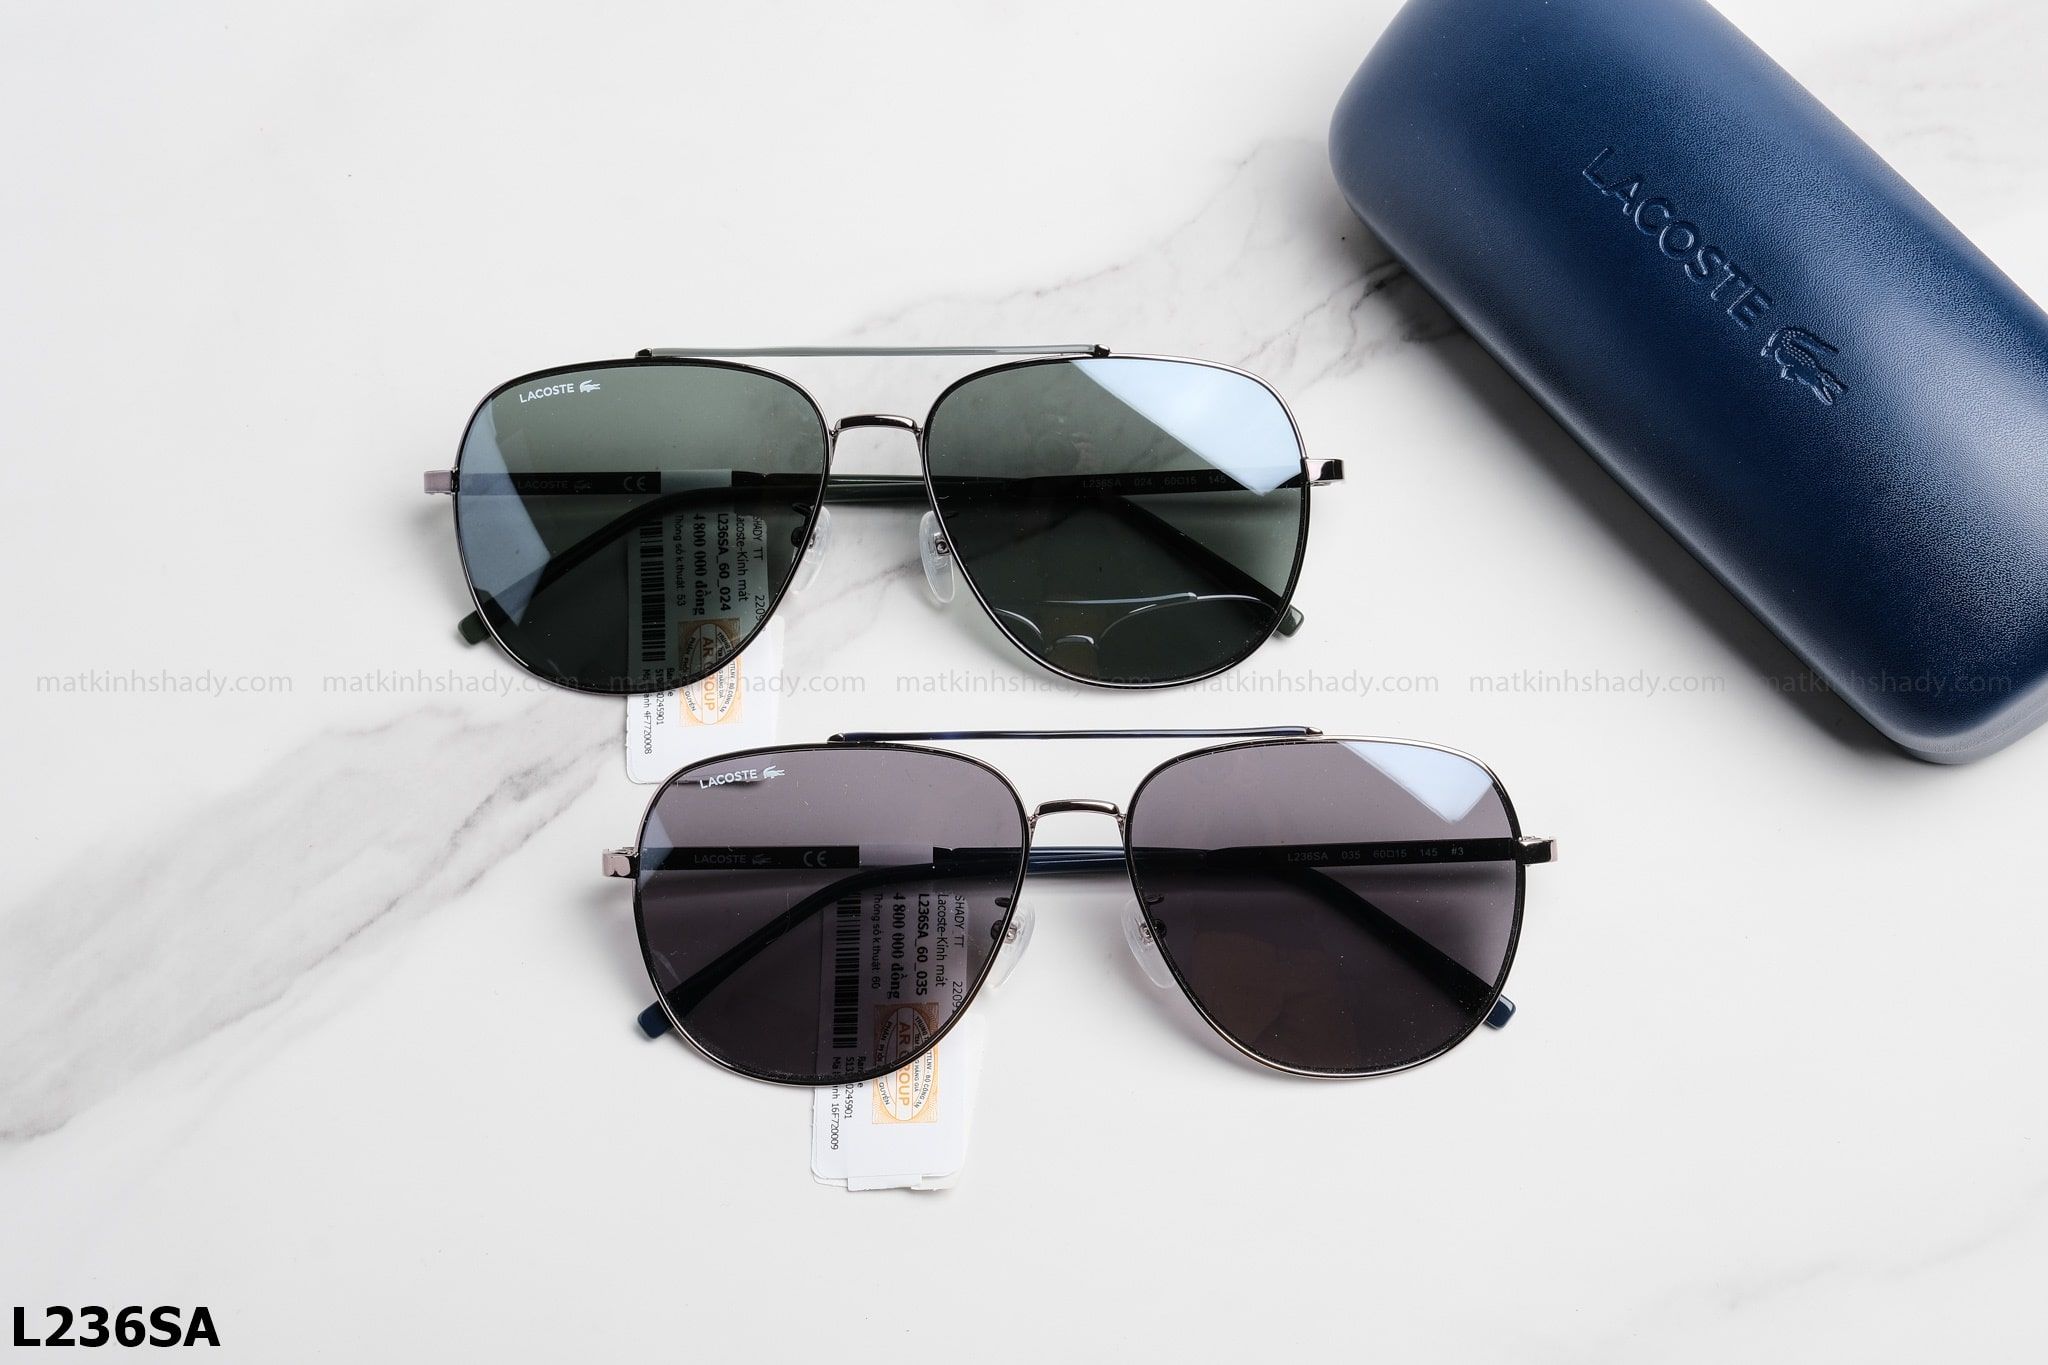  Lacoste Eyewear - Sunglasses - L236SA 